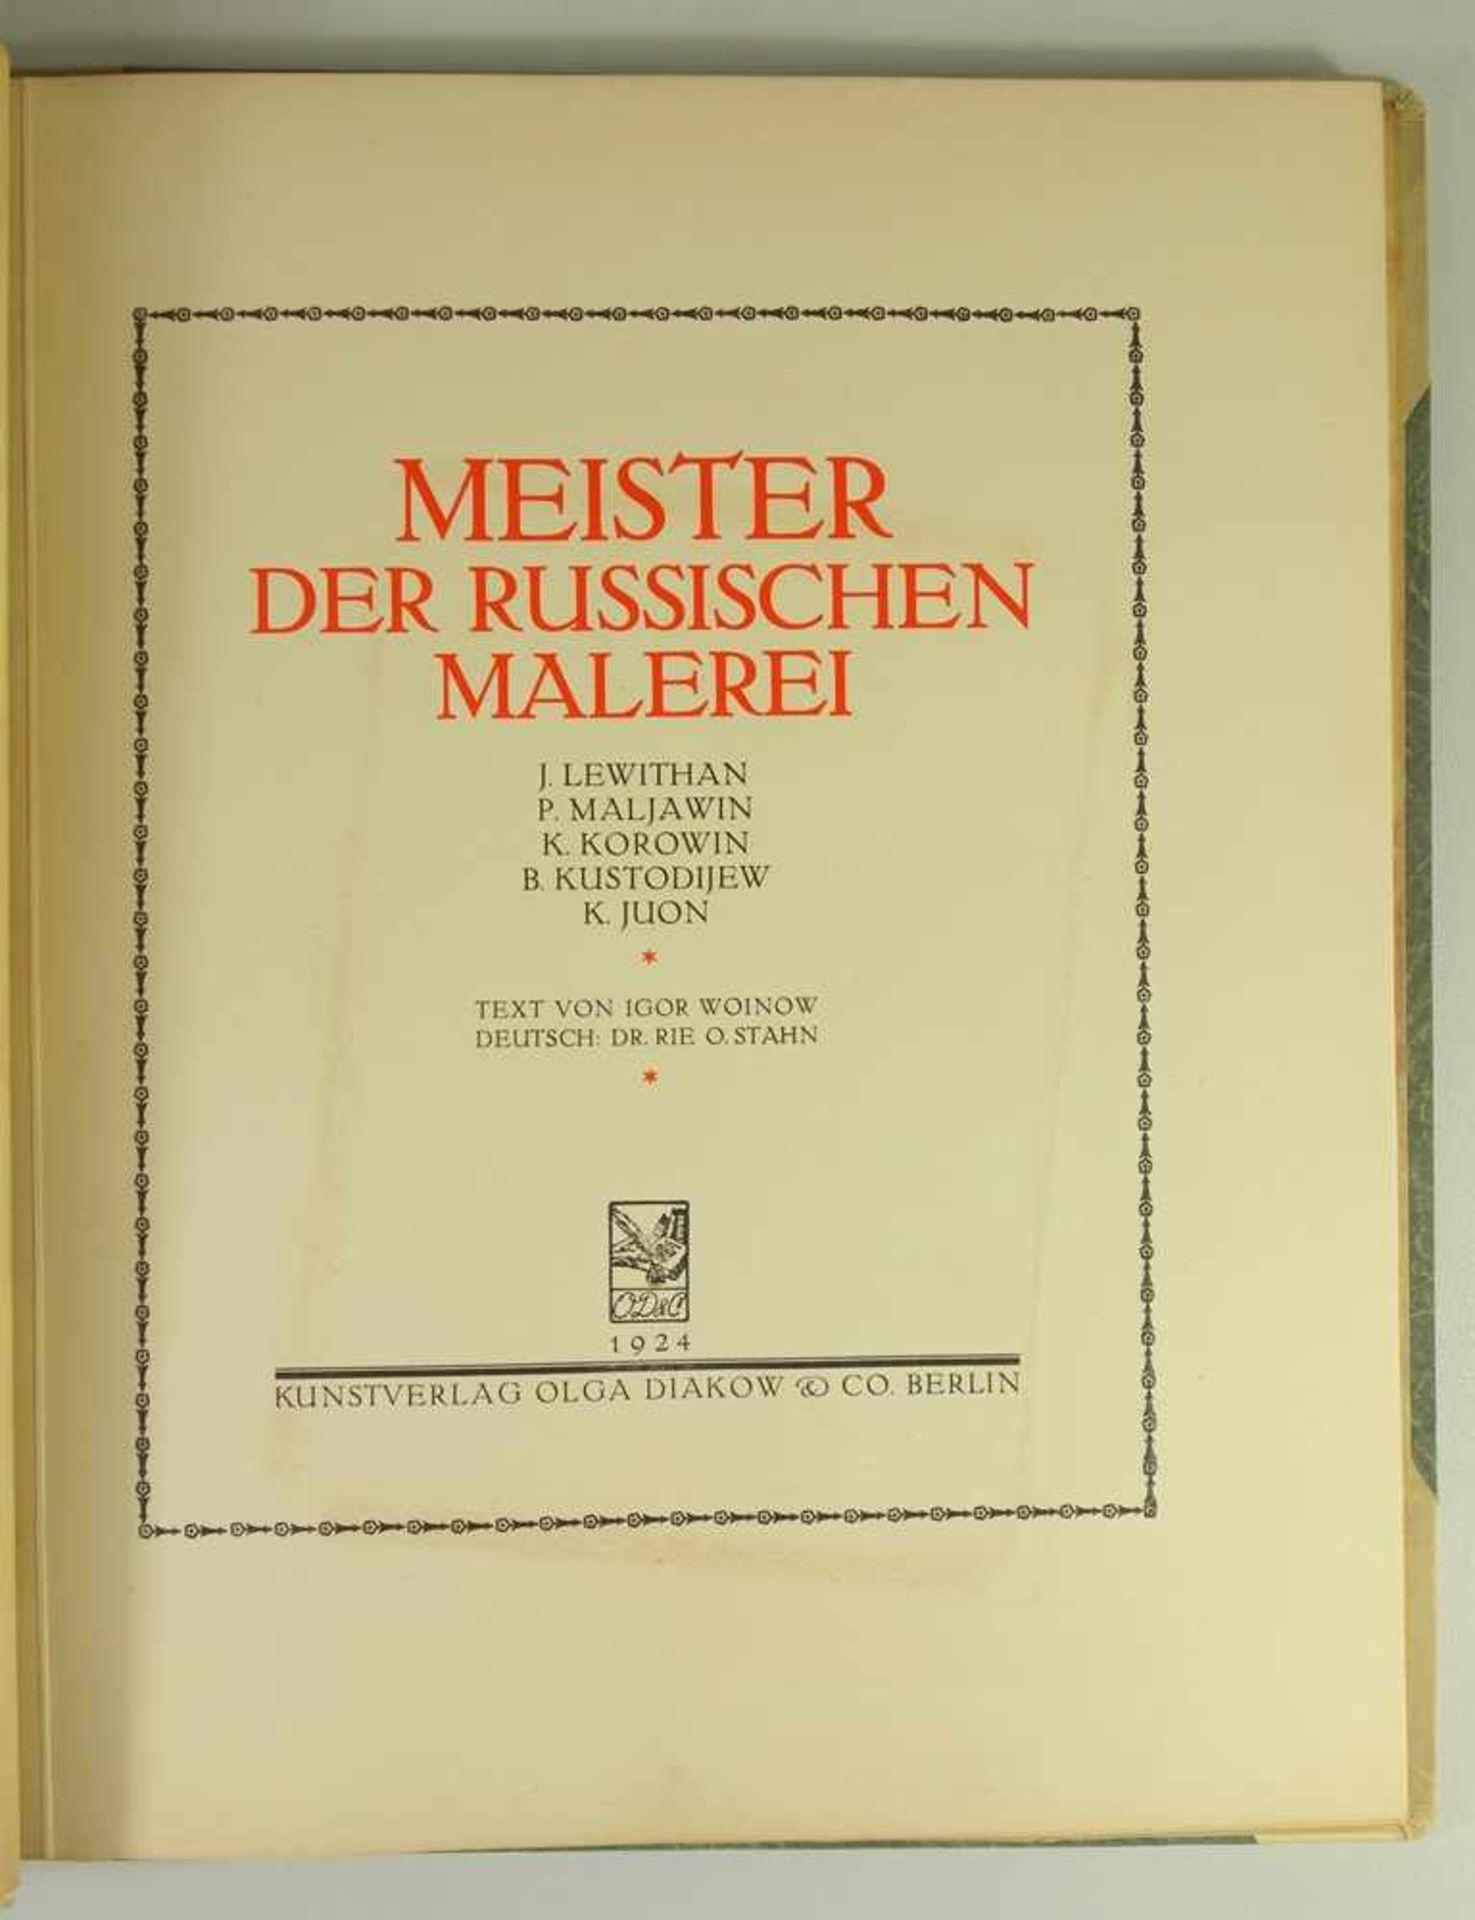 Meister der russischen Malerei, 1924, J.Lewithan, P.Maljawin, K.Korowin, B.Kustodijew, K.Juon; - Image 2 of 3